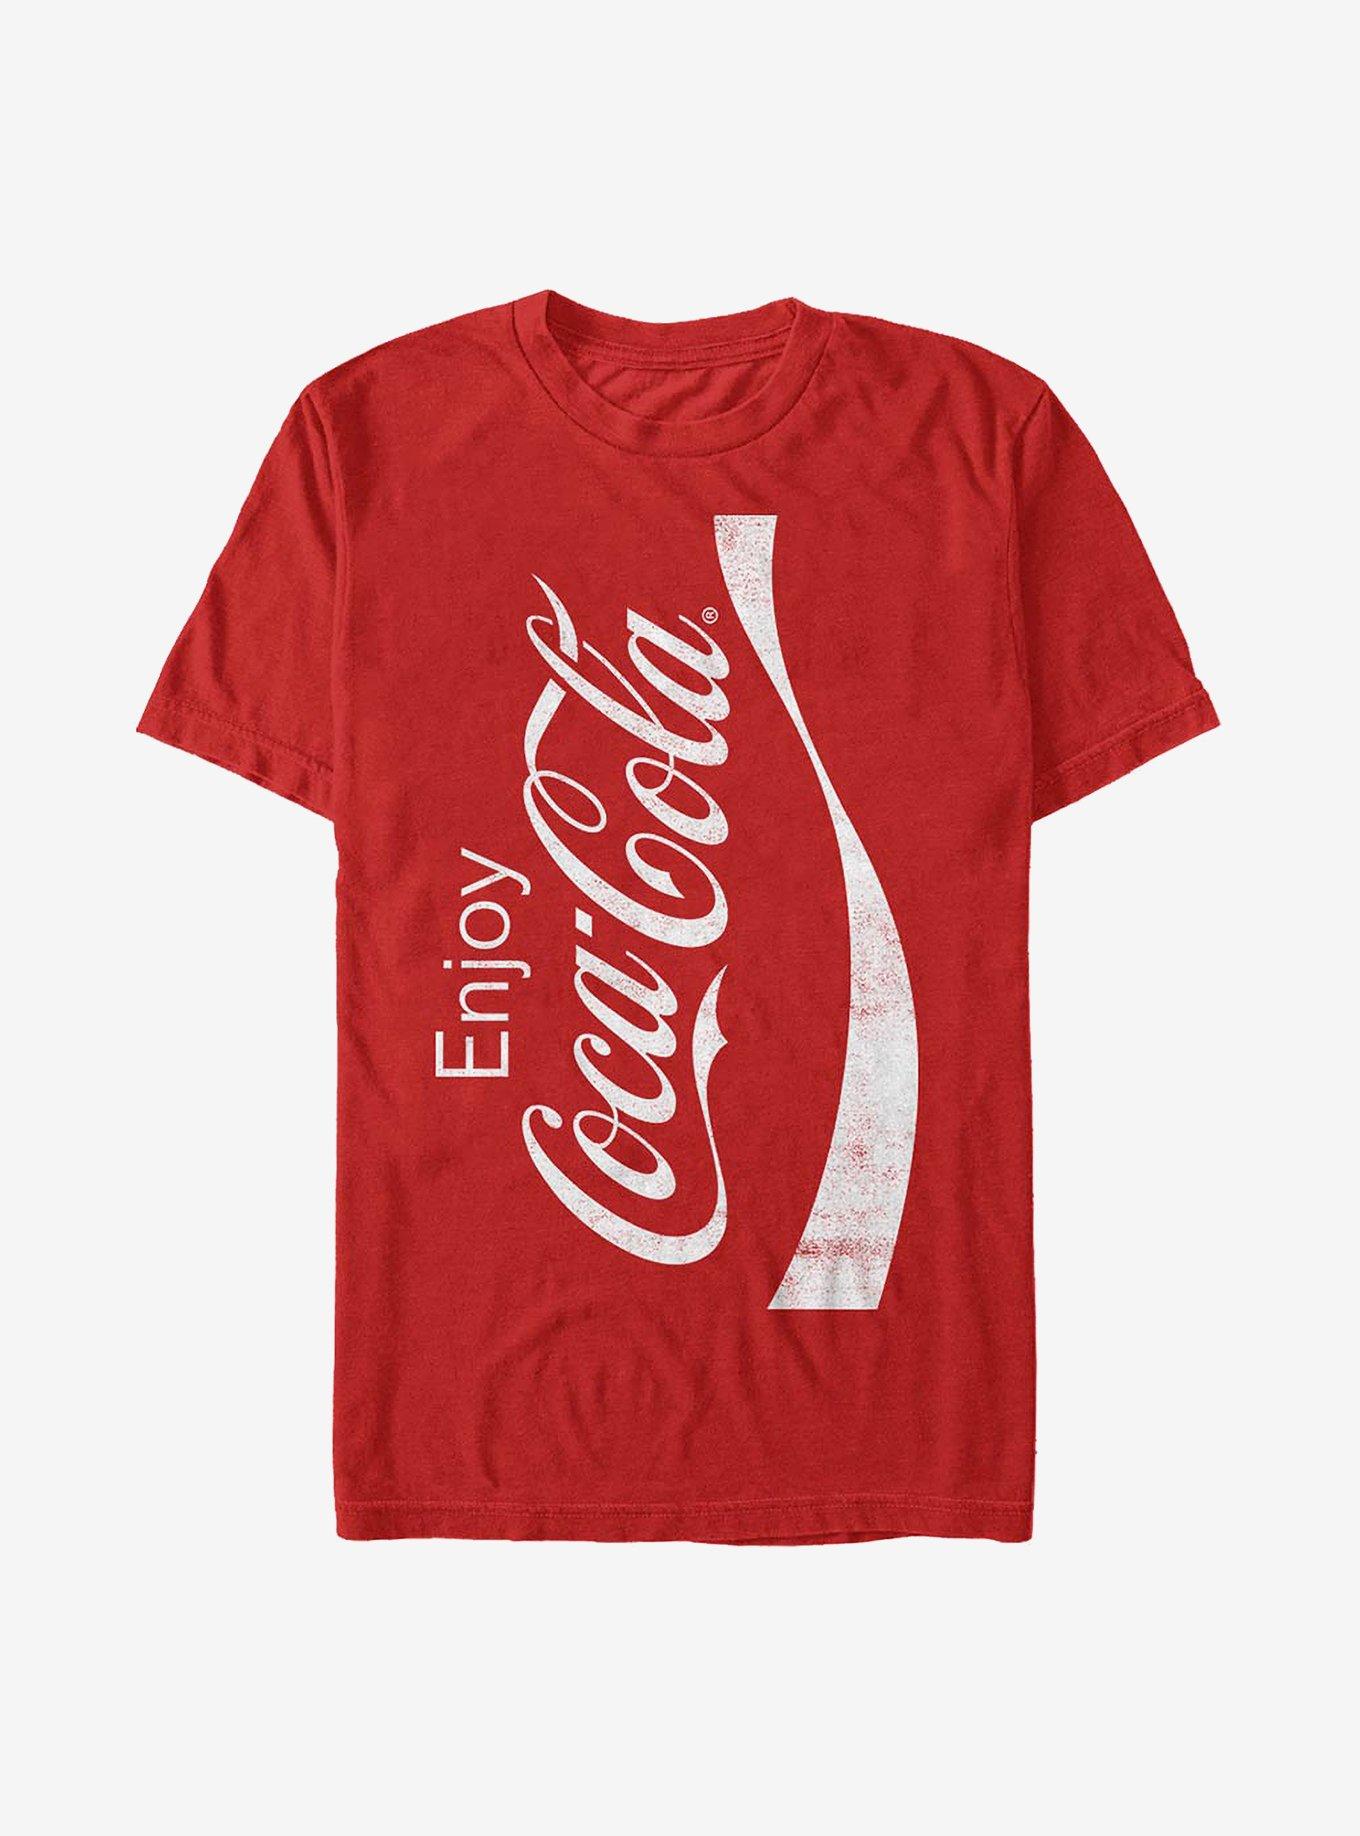 Coke Canned T-Shirt